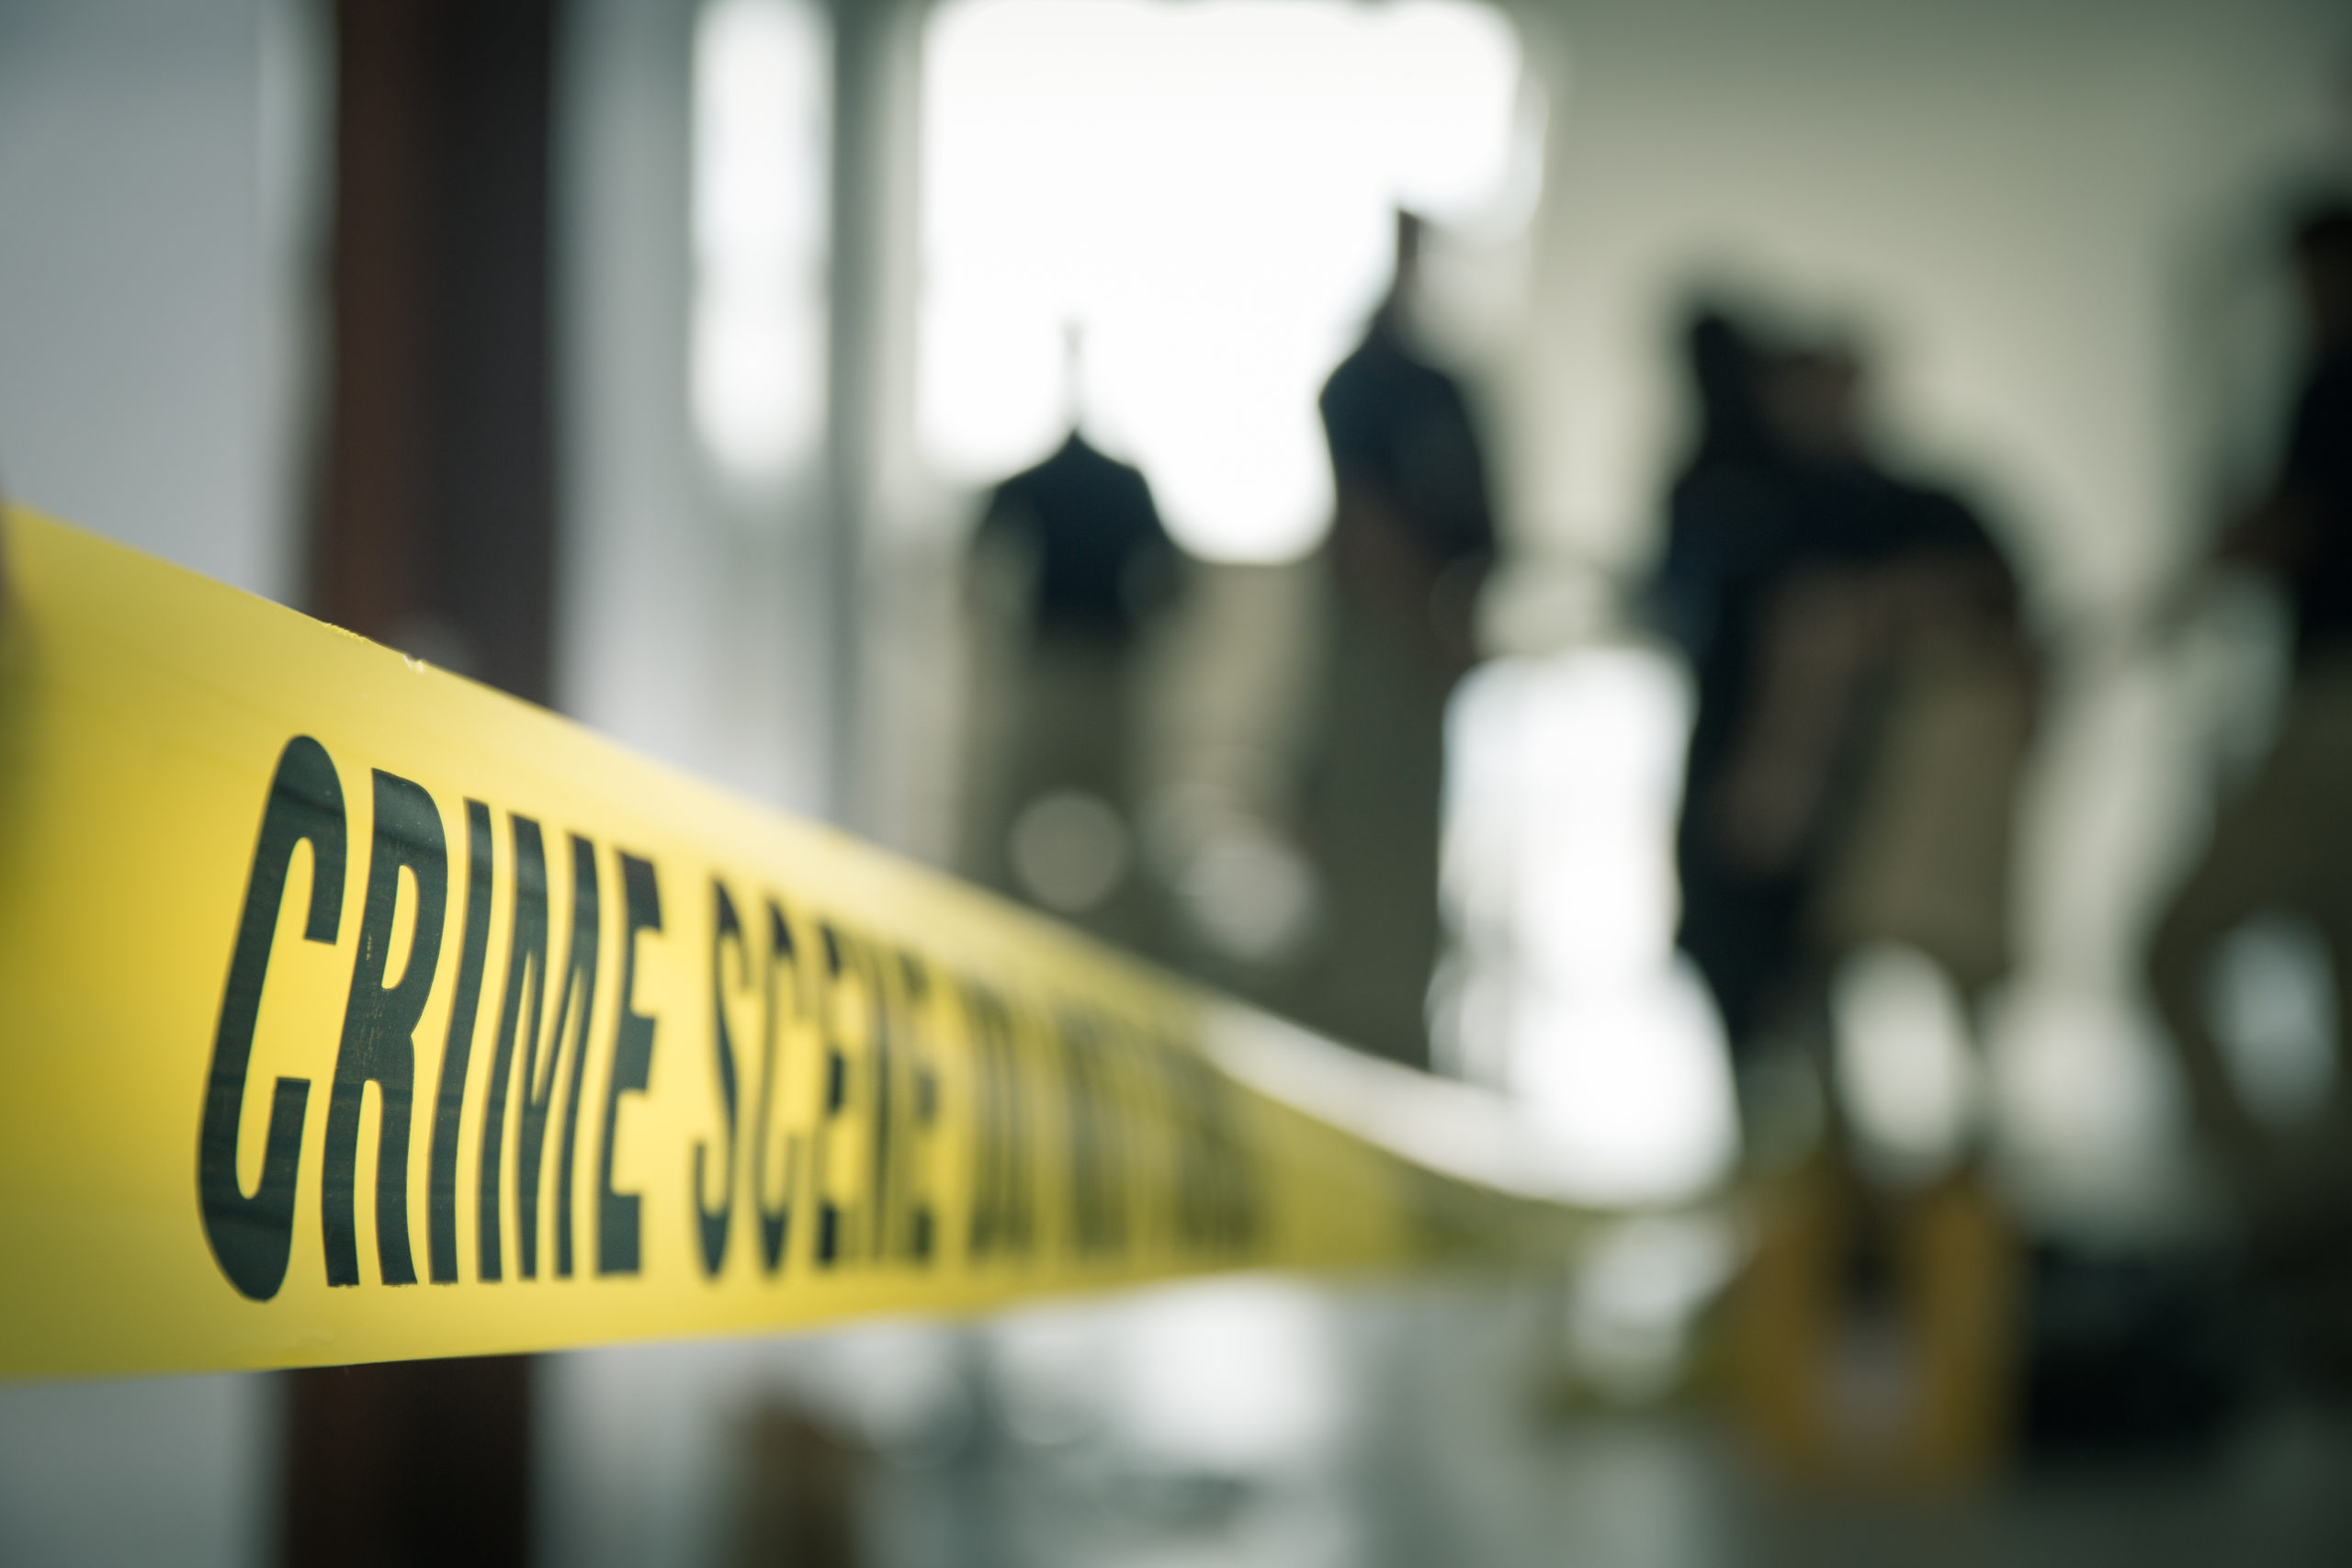 Crime scene tape [Prath/Shutterstock]